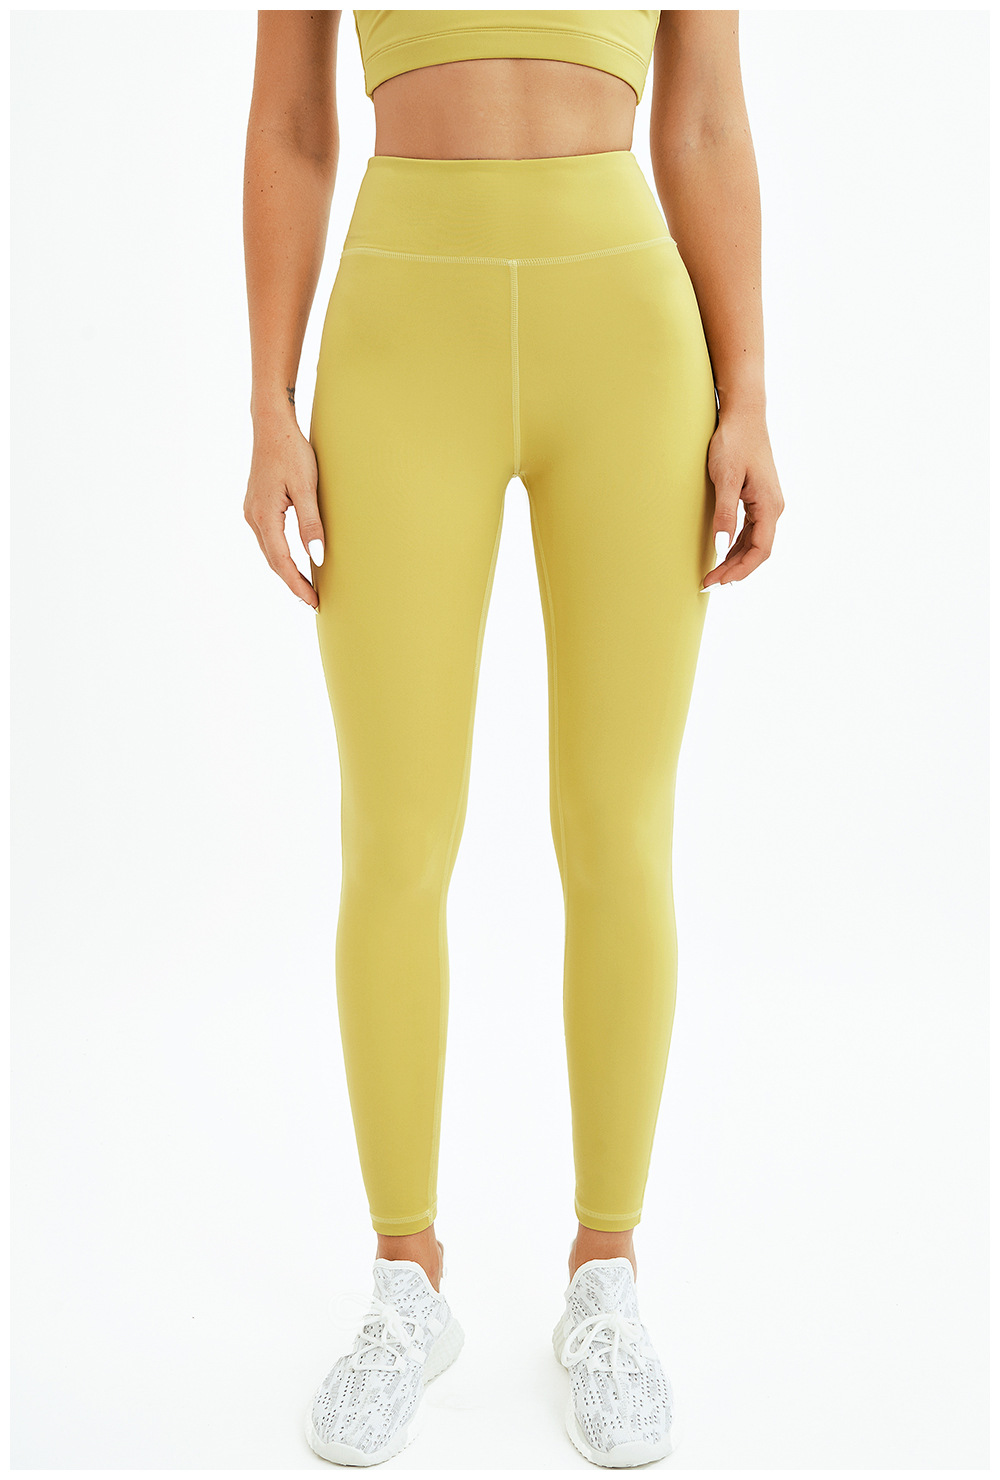 Buy Super weston Women's Plain Summer Leggings (3625871, Multicolour, Free  Size) -Combo of 5 at Amazon.in